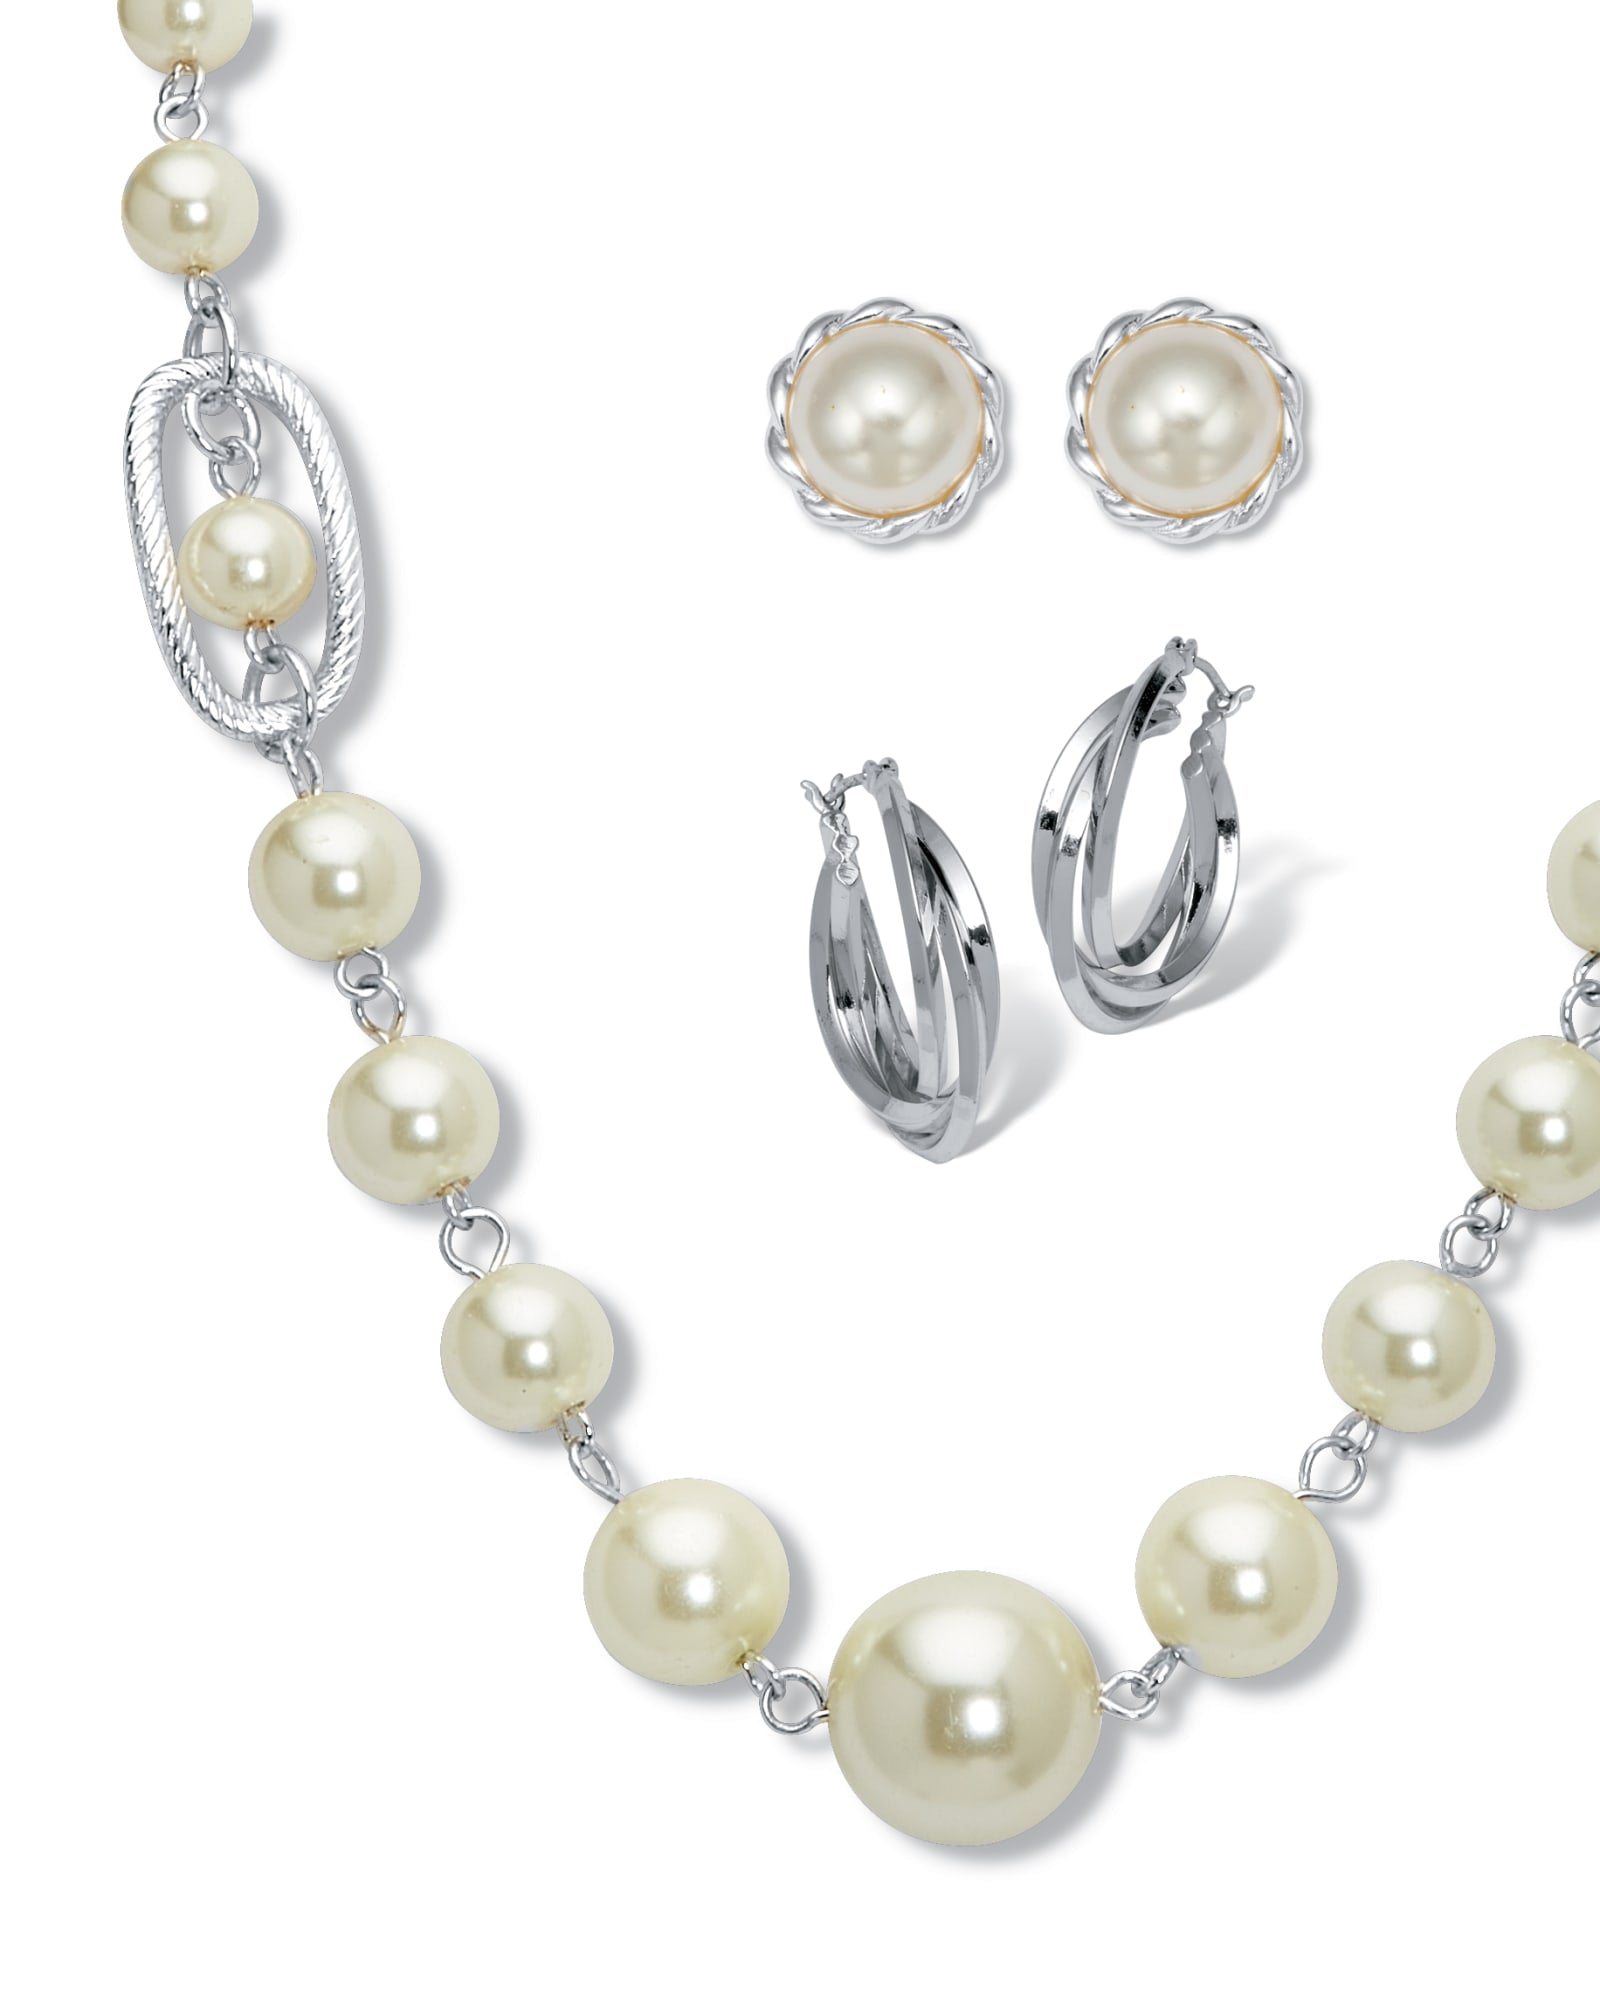 Silvertone Simulated Pearl Silvertone Graduated Jewelry Set, 18 inches | White